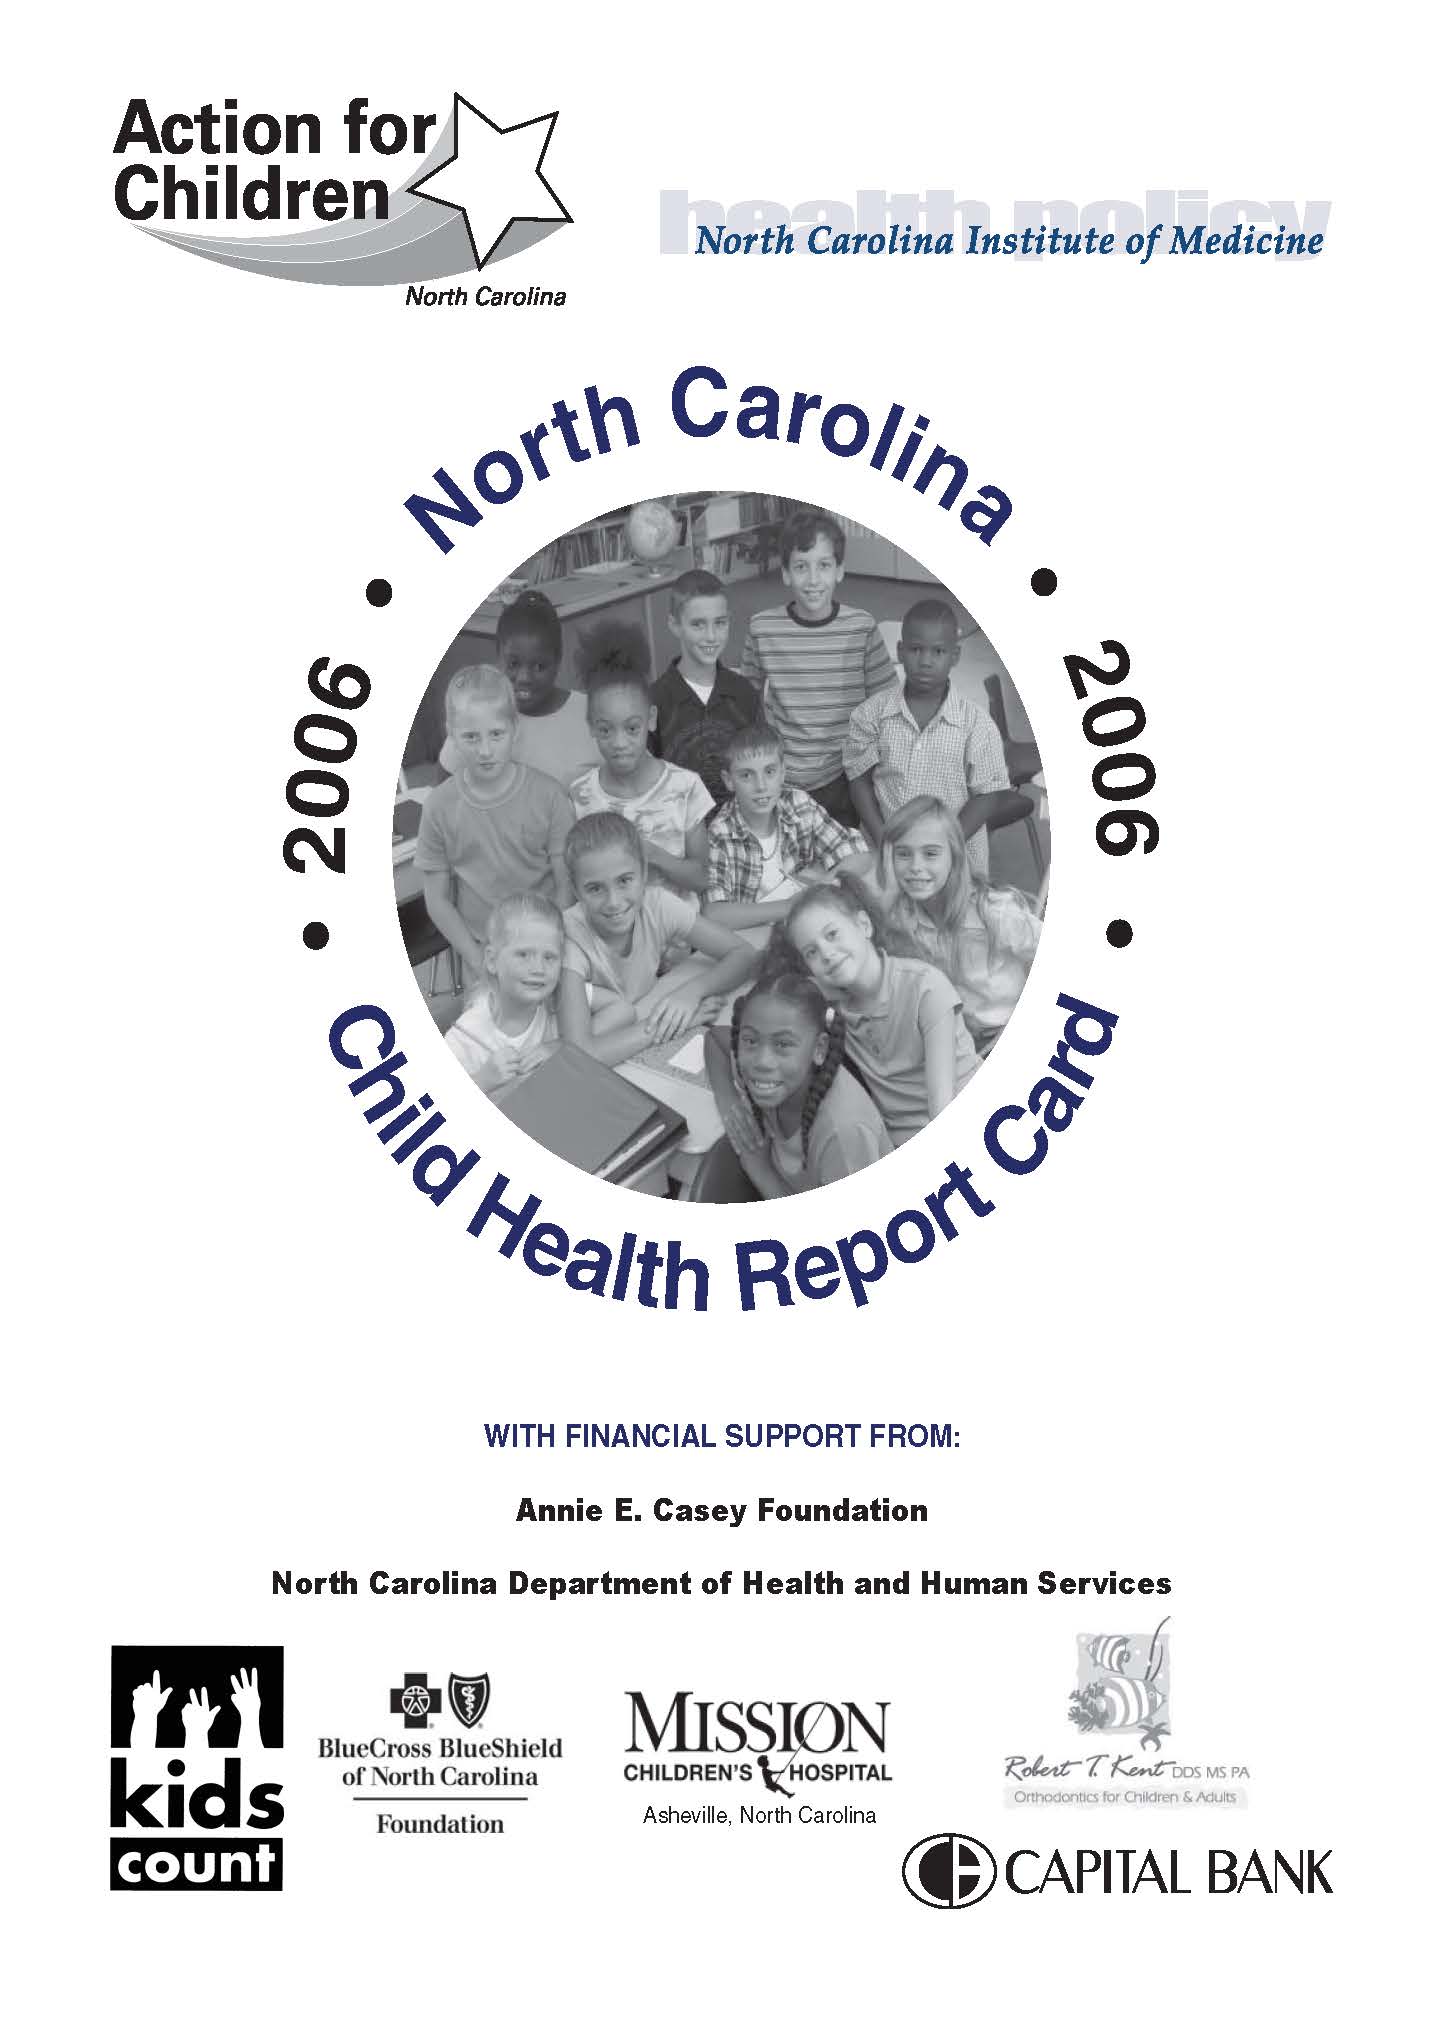 NC Child Health Report Card 2006